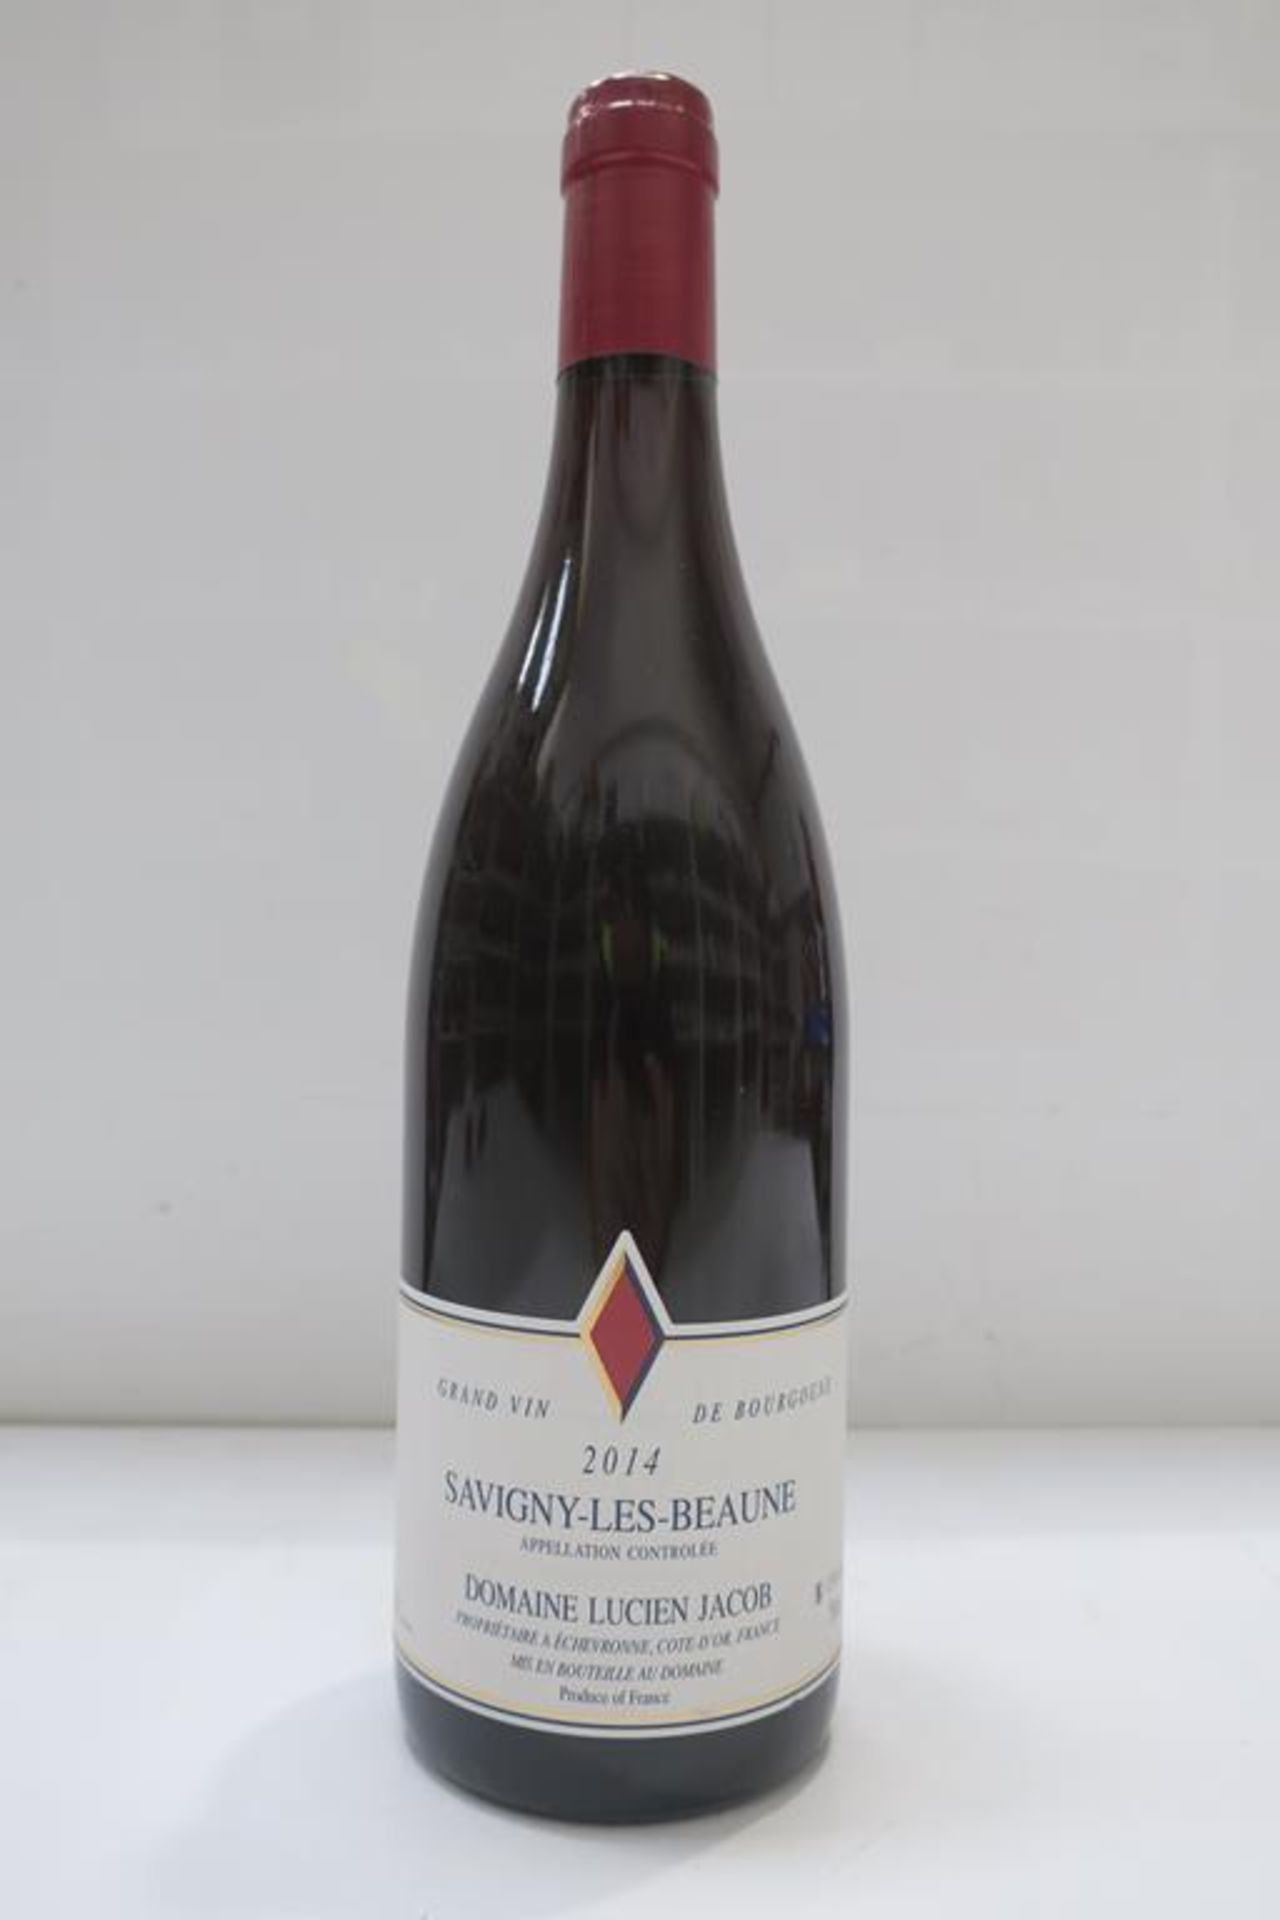 12 Bottles of Domain Lucien Jacob Red Wine